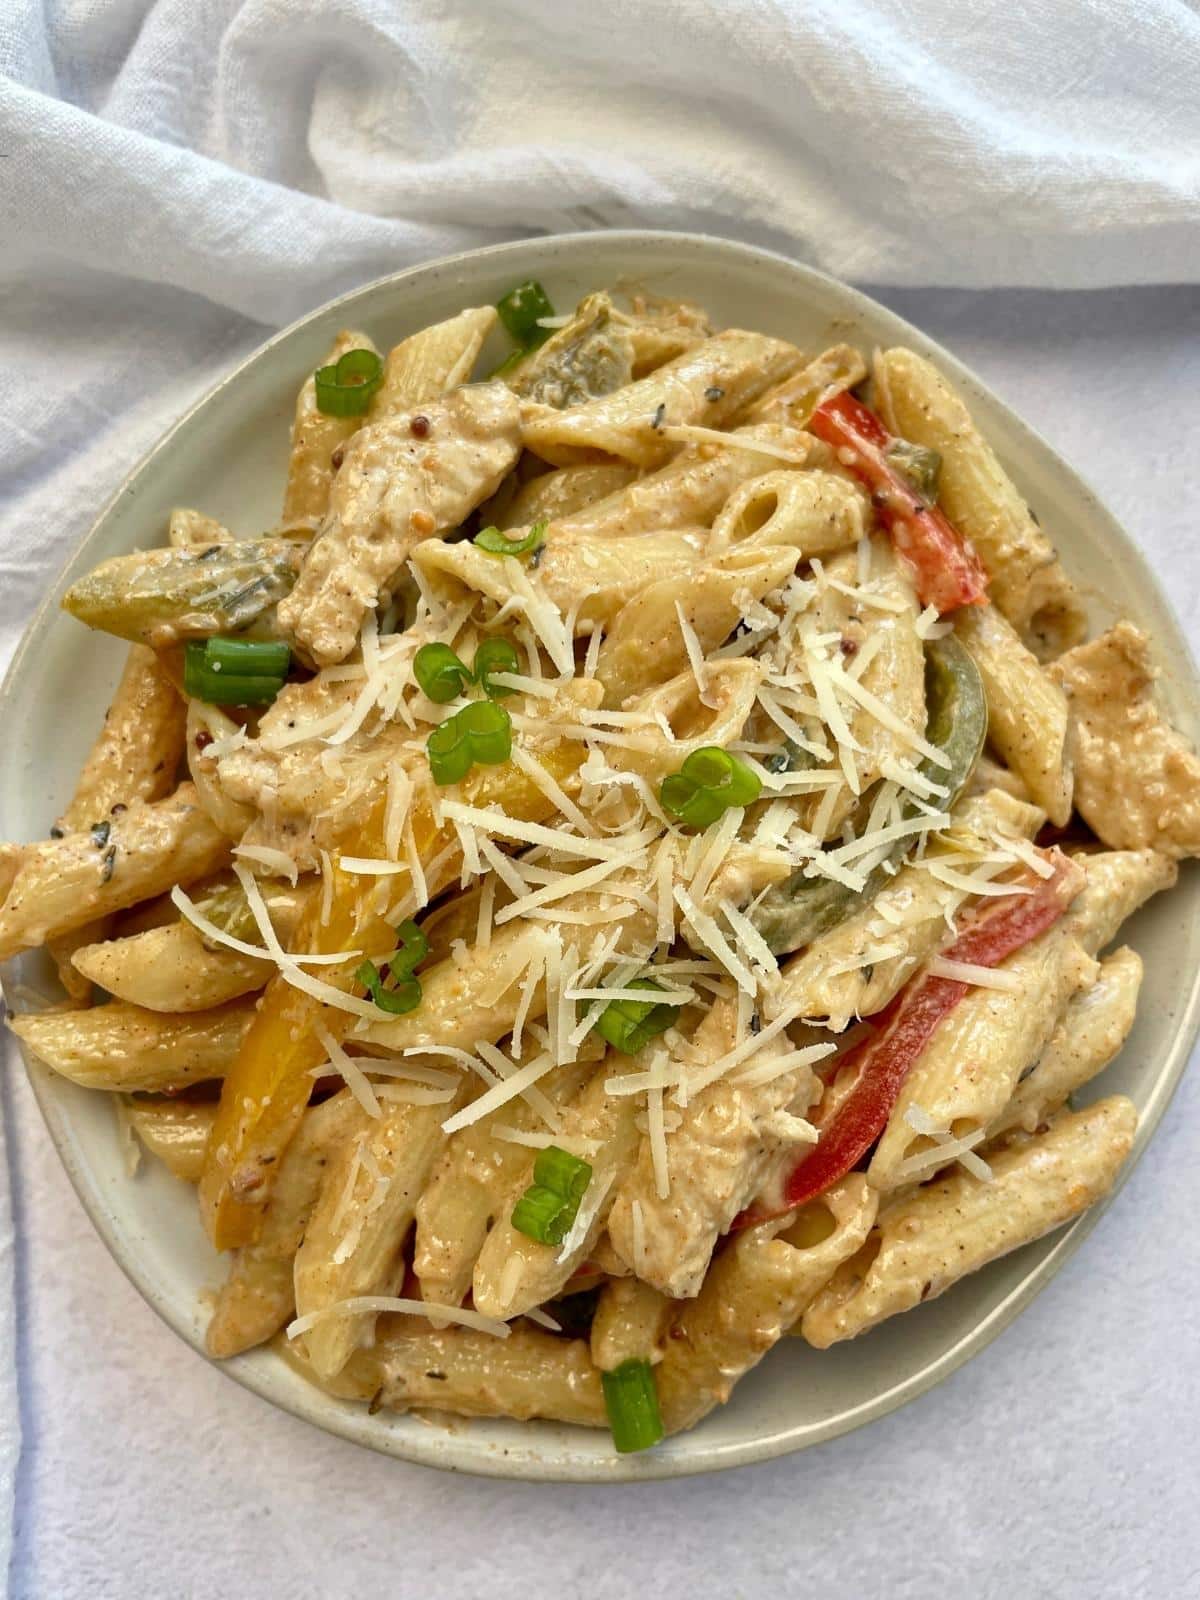 Rasta pasta with vegan parmesan.